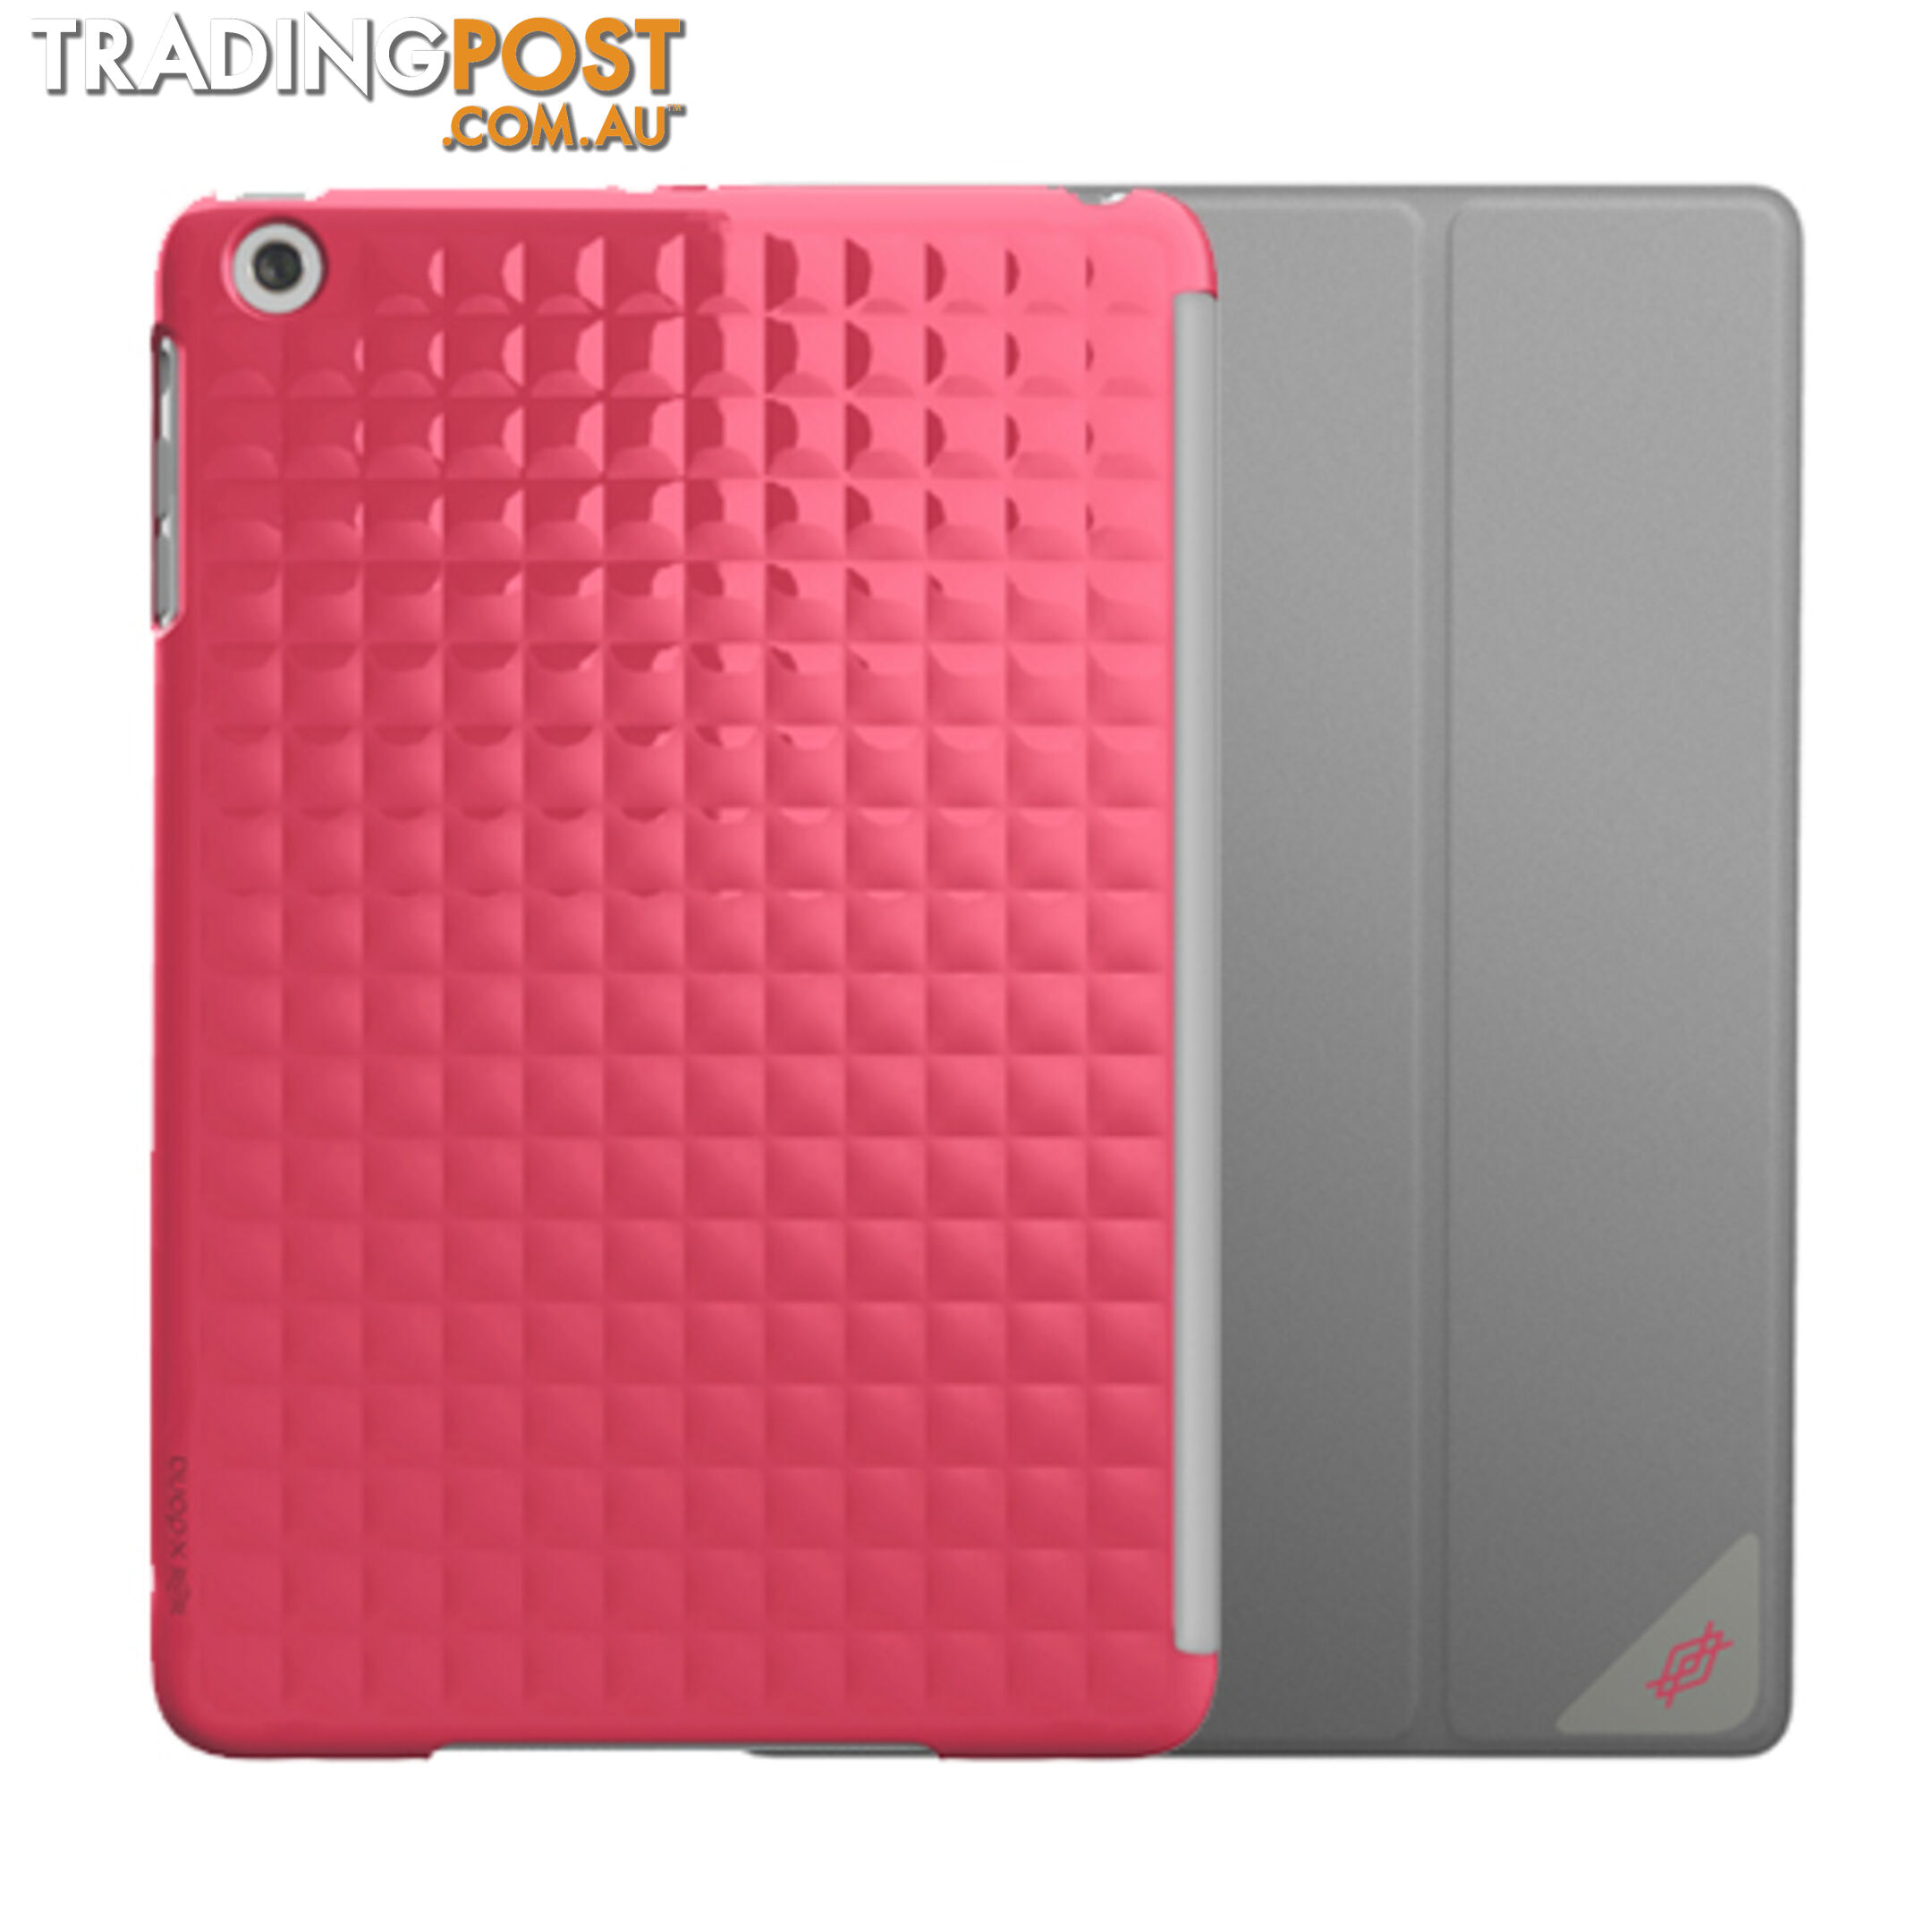 X-Doria SmartJacket for Apple iPad Mini 1 2 and 3 - Pink - 6950941410366/3241200309 - X-Doria